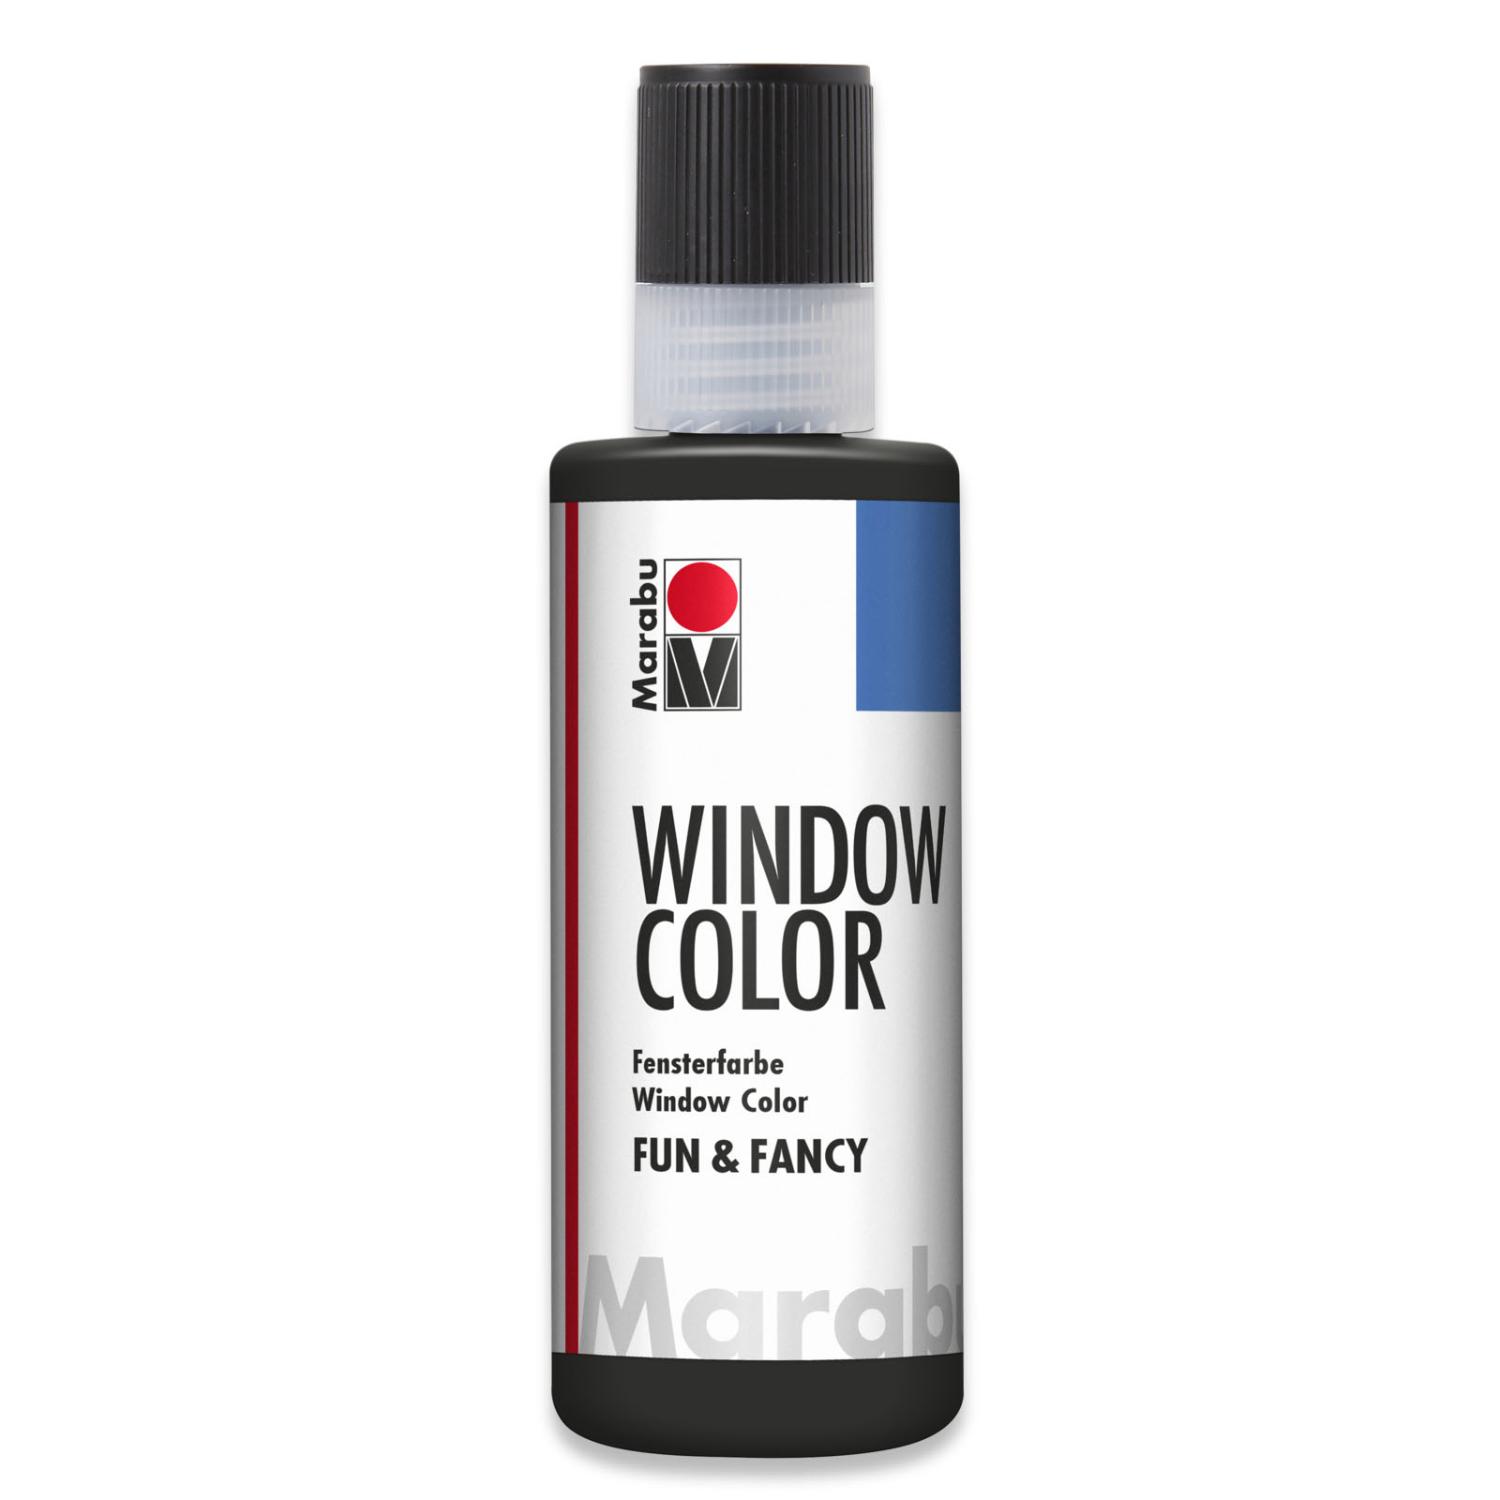 Marabu Window Color fun & fancy, 80 ml, schwarz